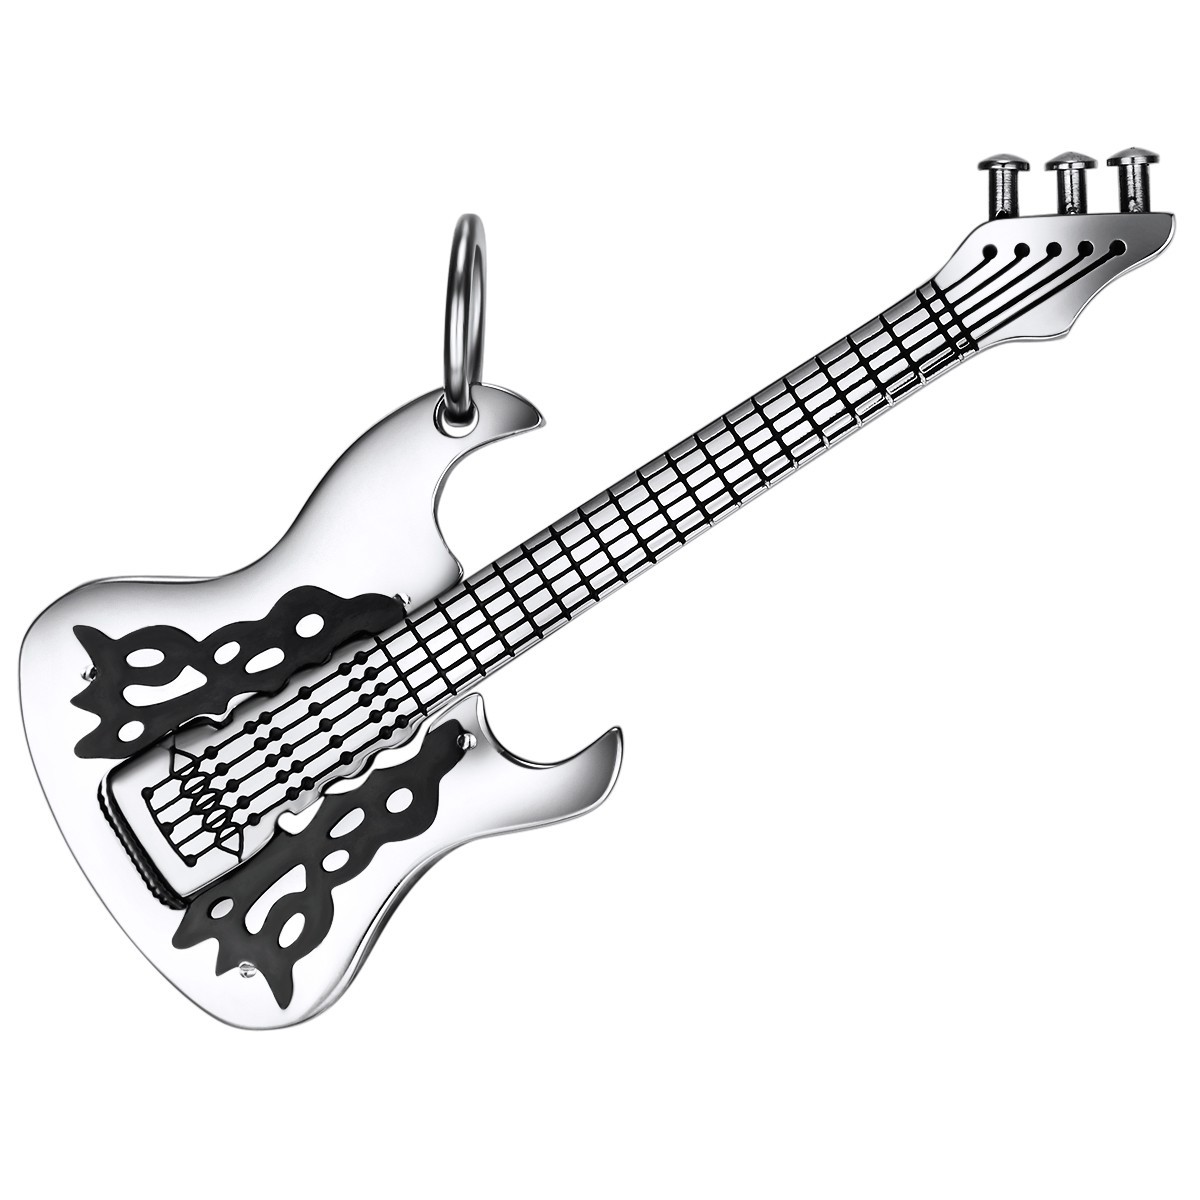 Stainless Steel Guitar Pendant with Black Enamel Design